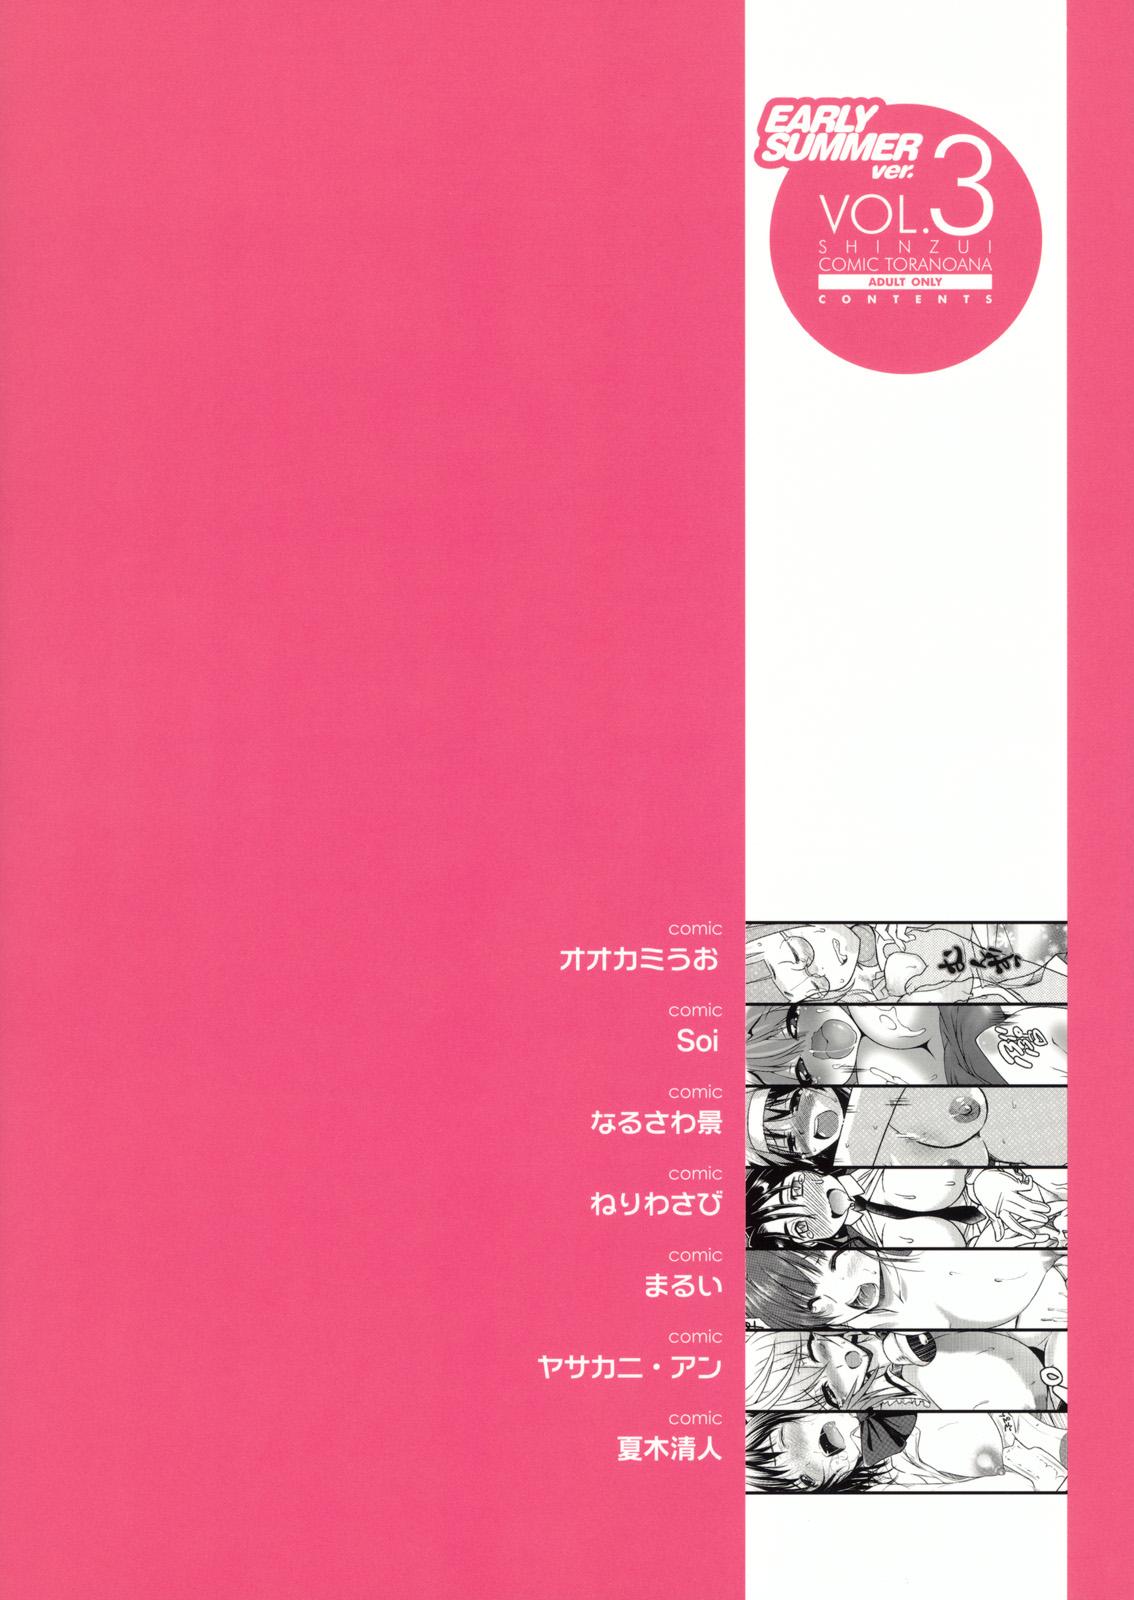 Shinzui EARLY SUMMER ver. Vol. 3 145